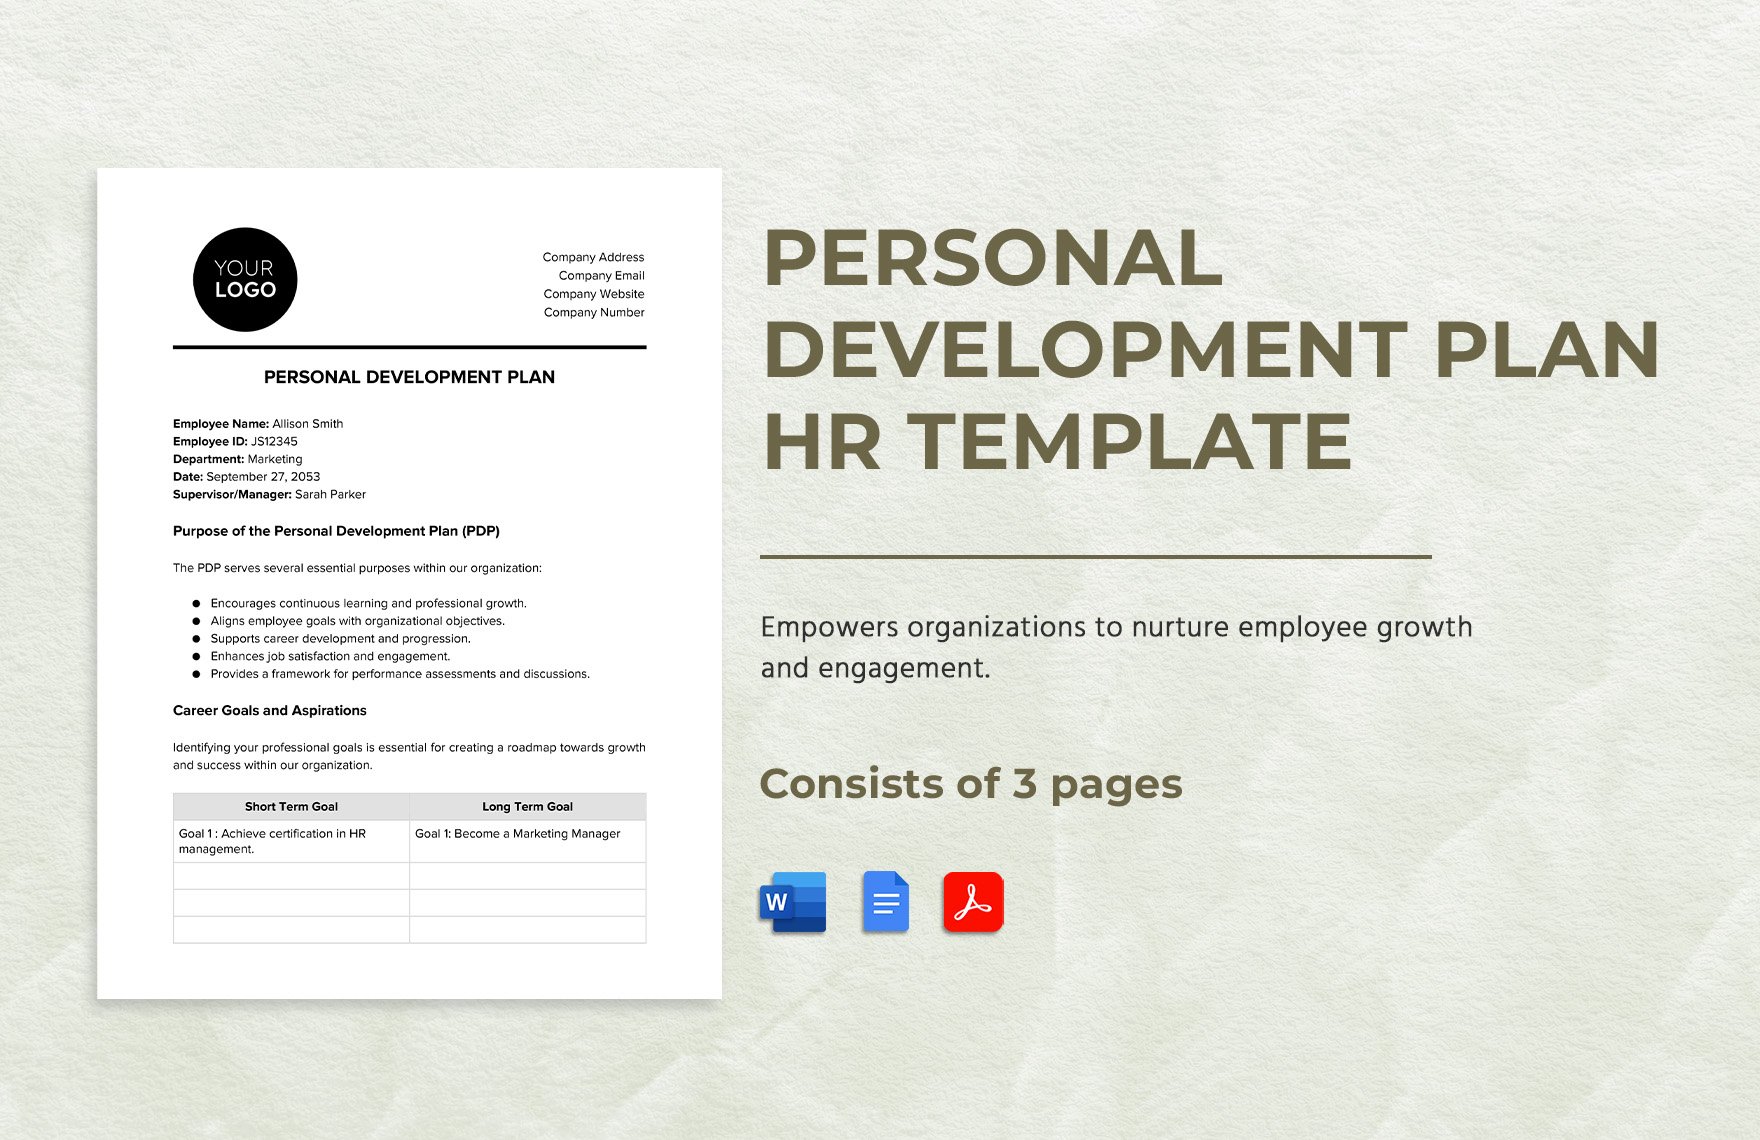 Personal Development Plan HR Template